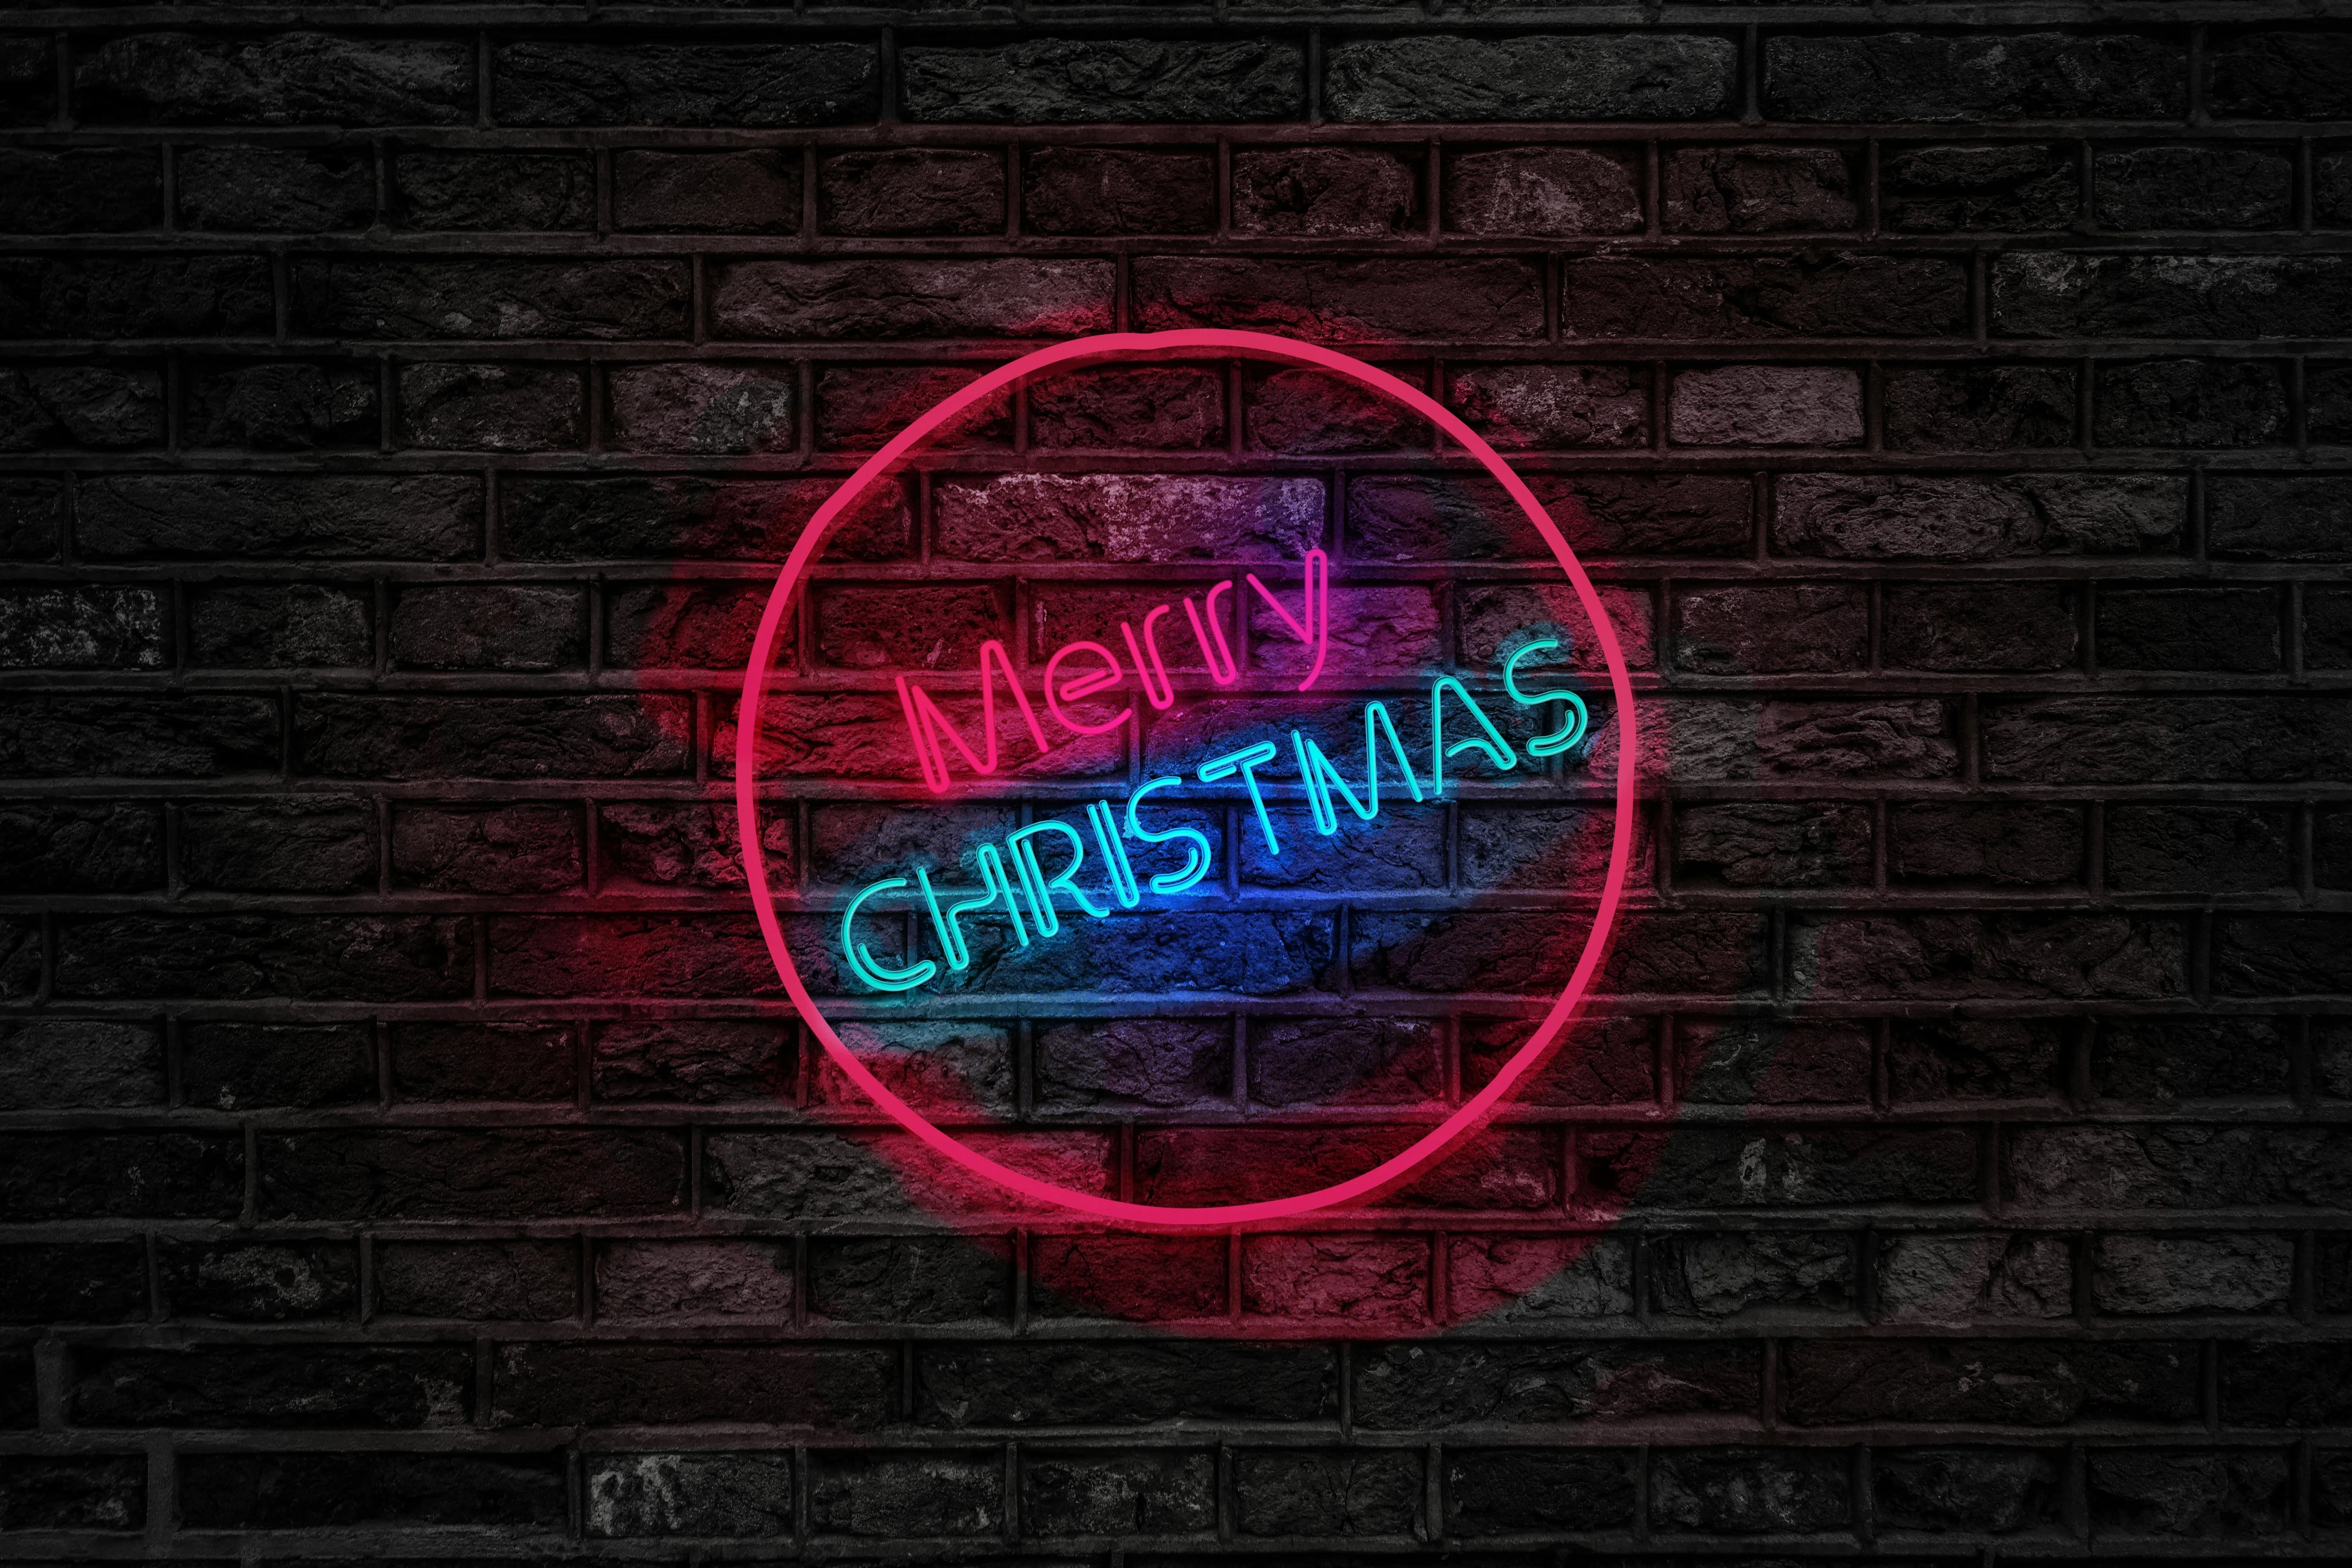 merry christmas neon sign on bricks for how to hang neon sign on brick wall